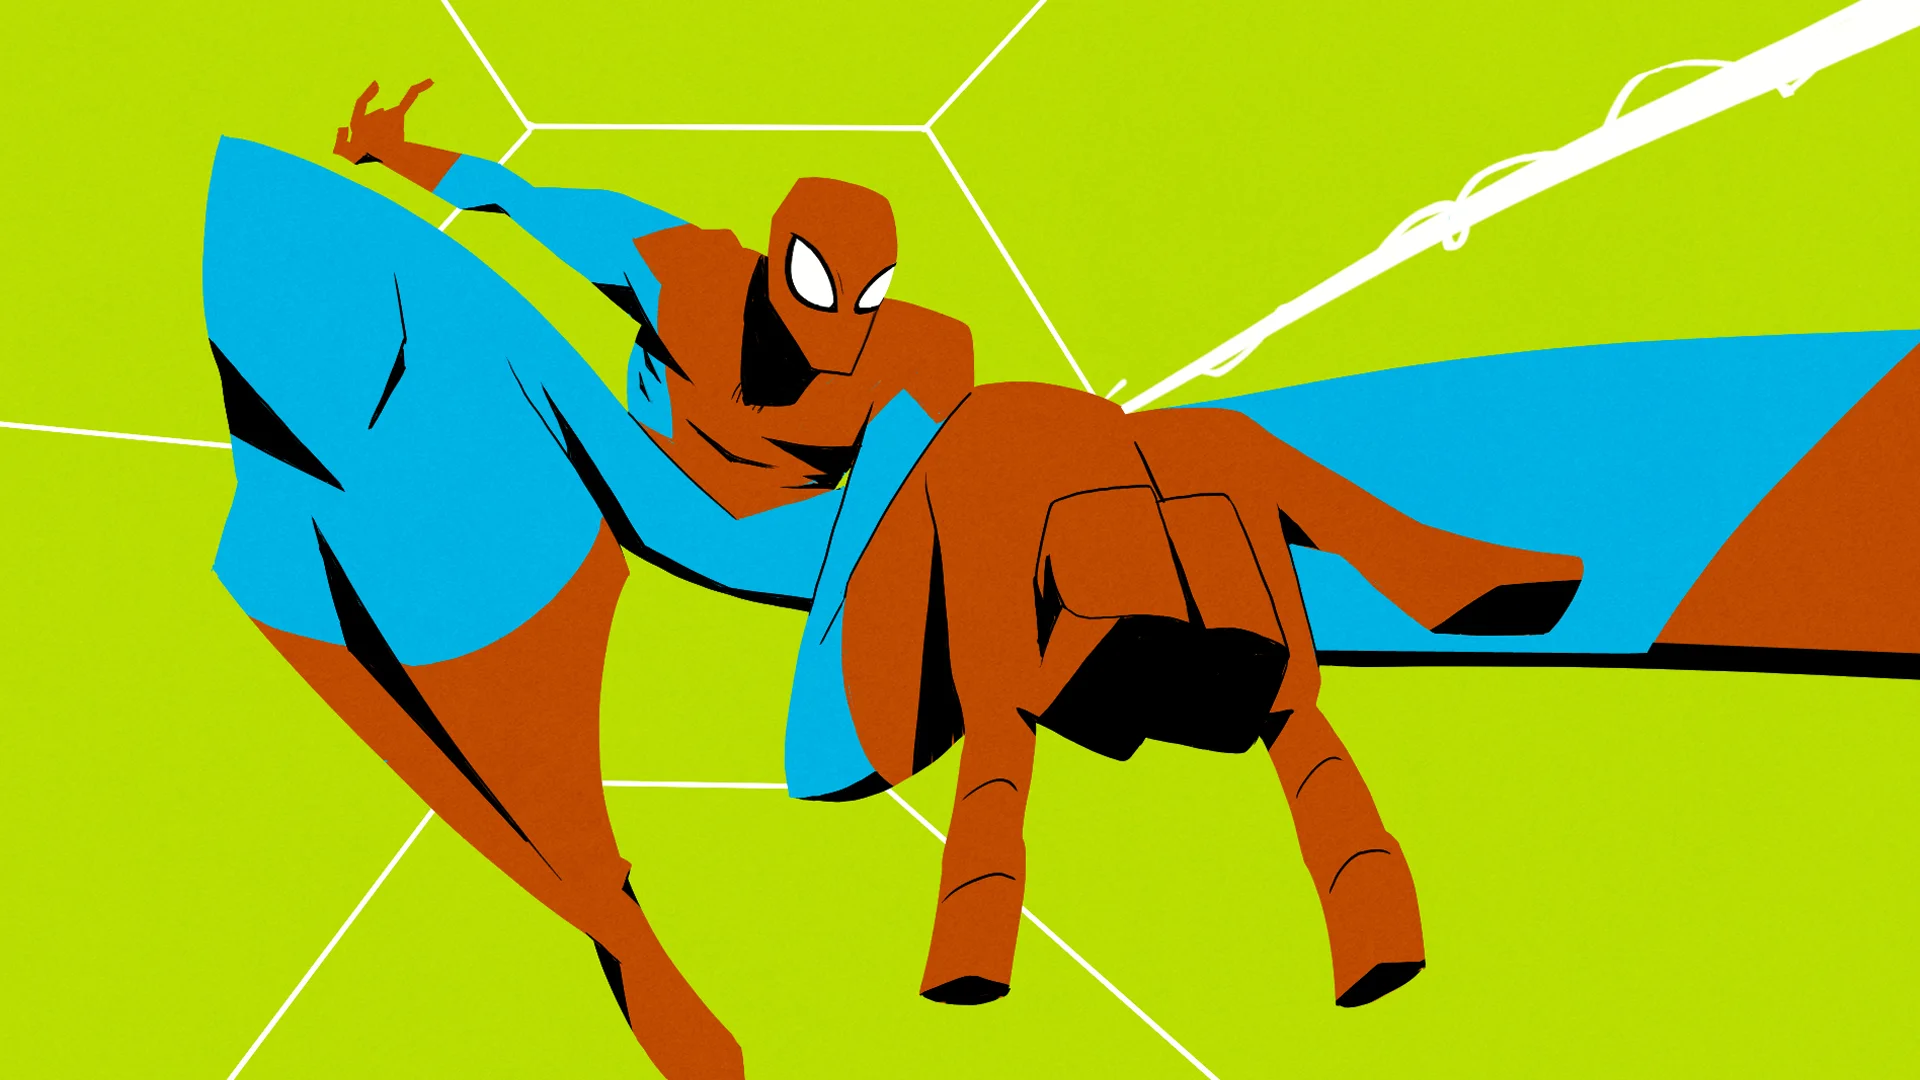 the ultimate spider man disney xd wallpaper